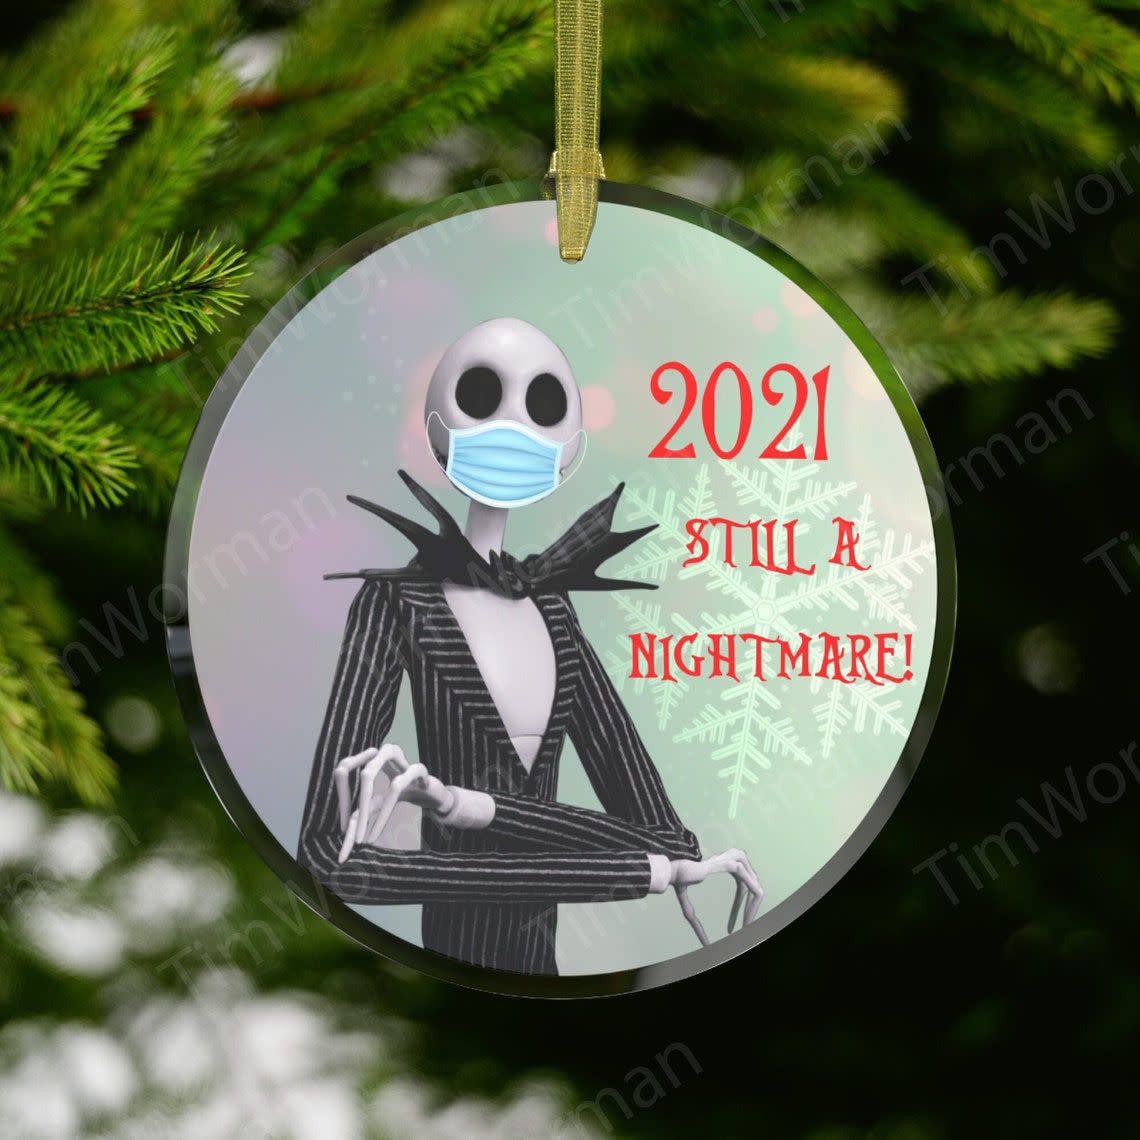 Nightmare Before Christmas Still a Nightmare 2021 Ornament